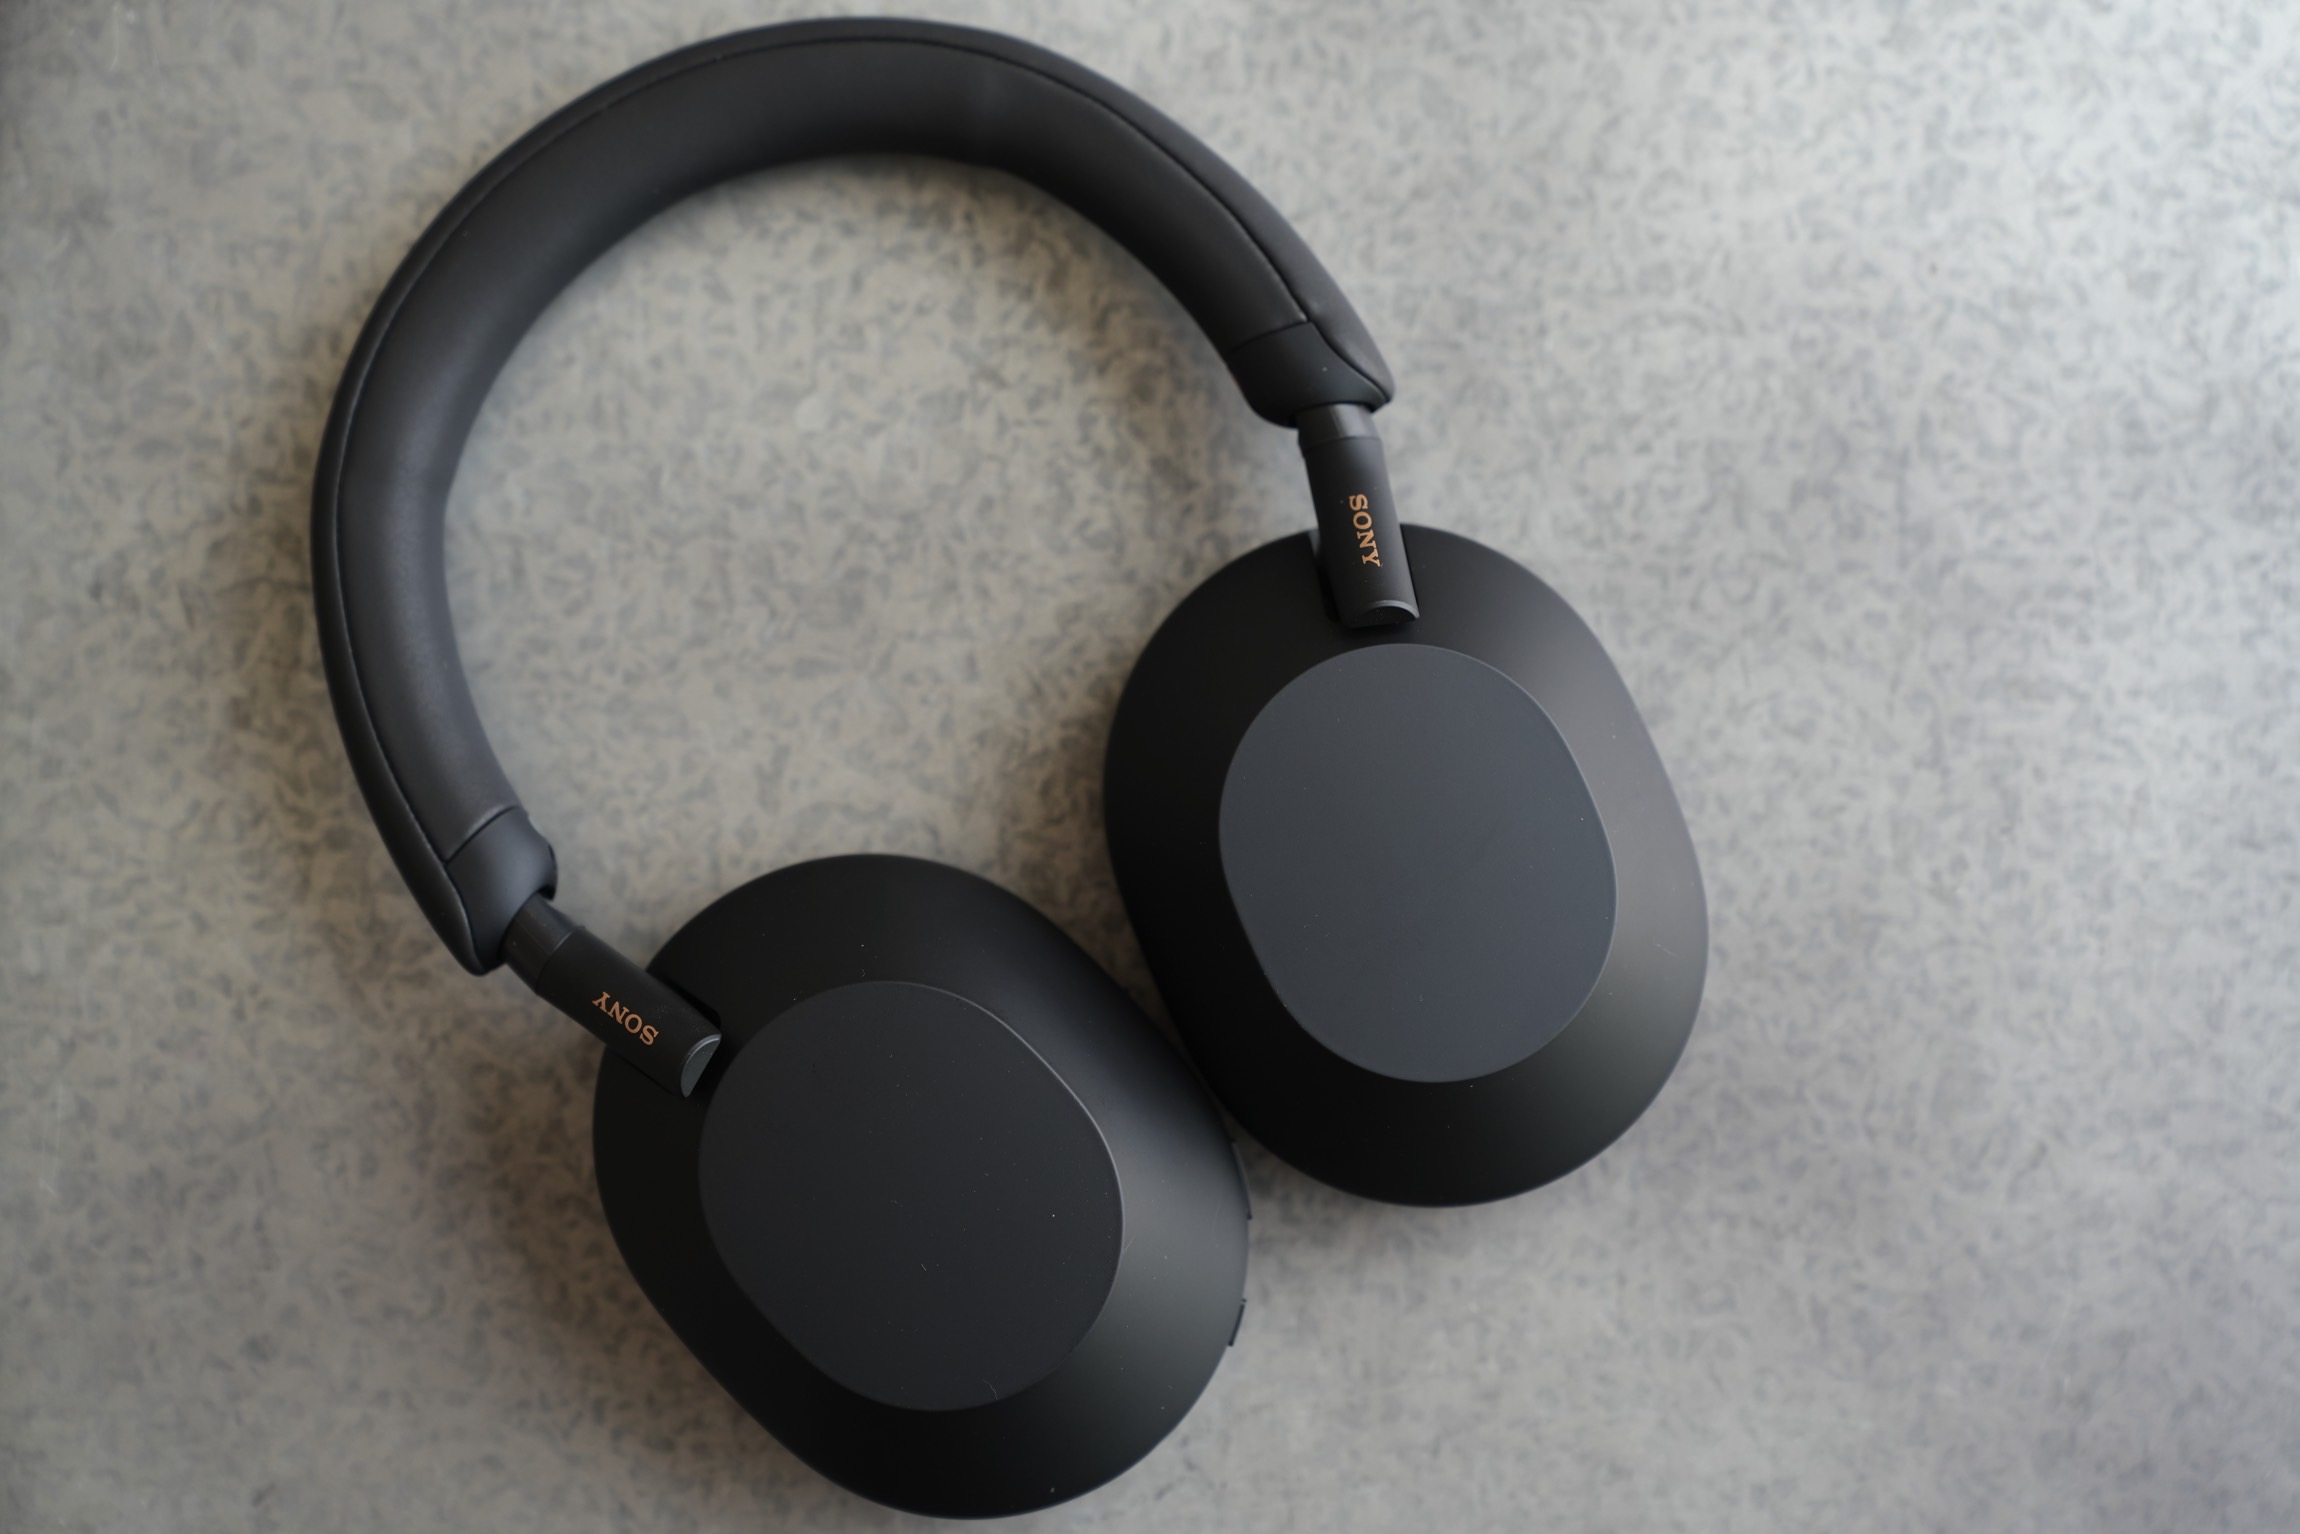 Sony New Headphonessony Wh-1000xm5 Wireless Noise-canceling Headphones  With Mic